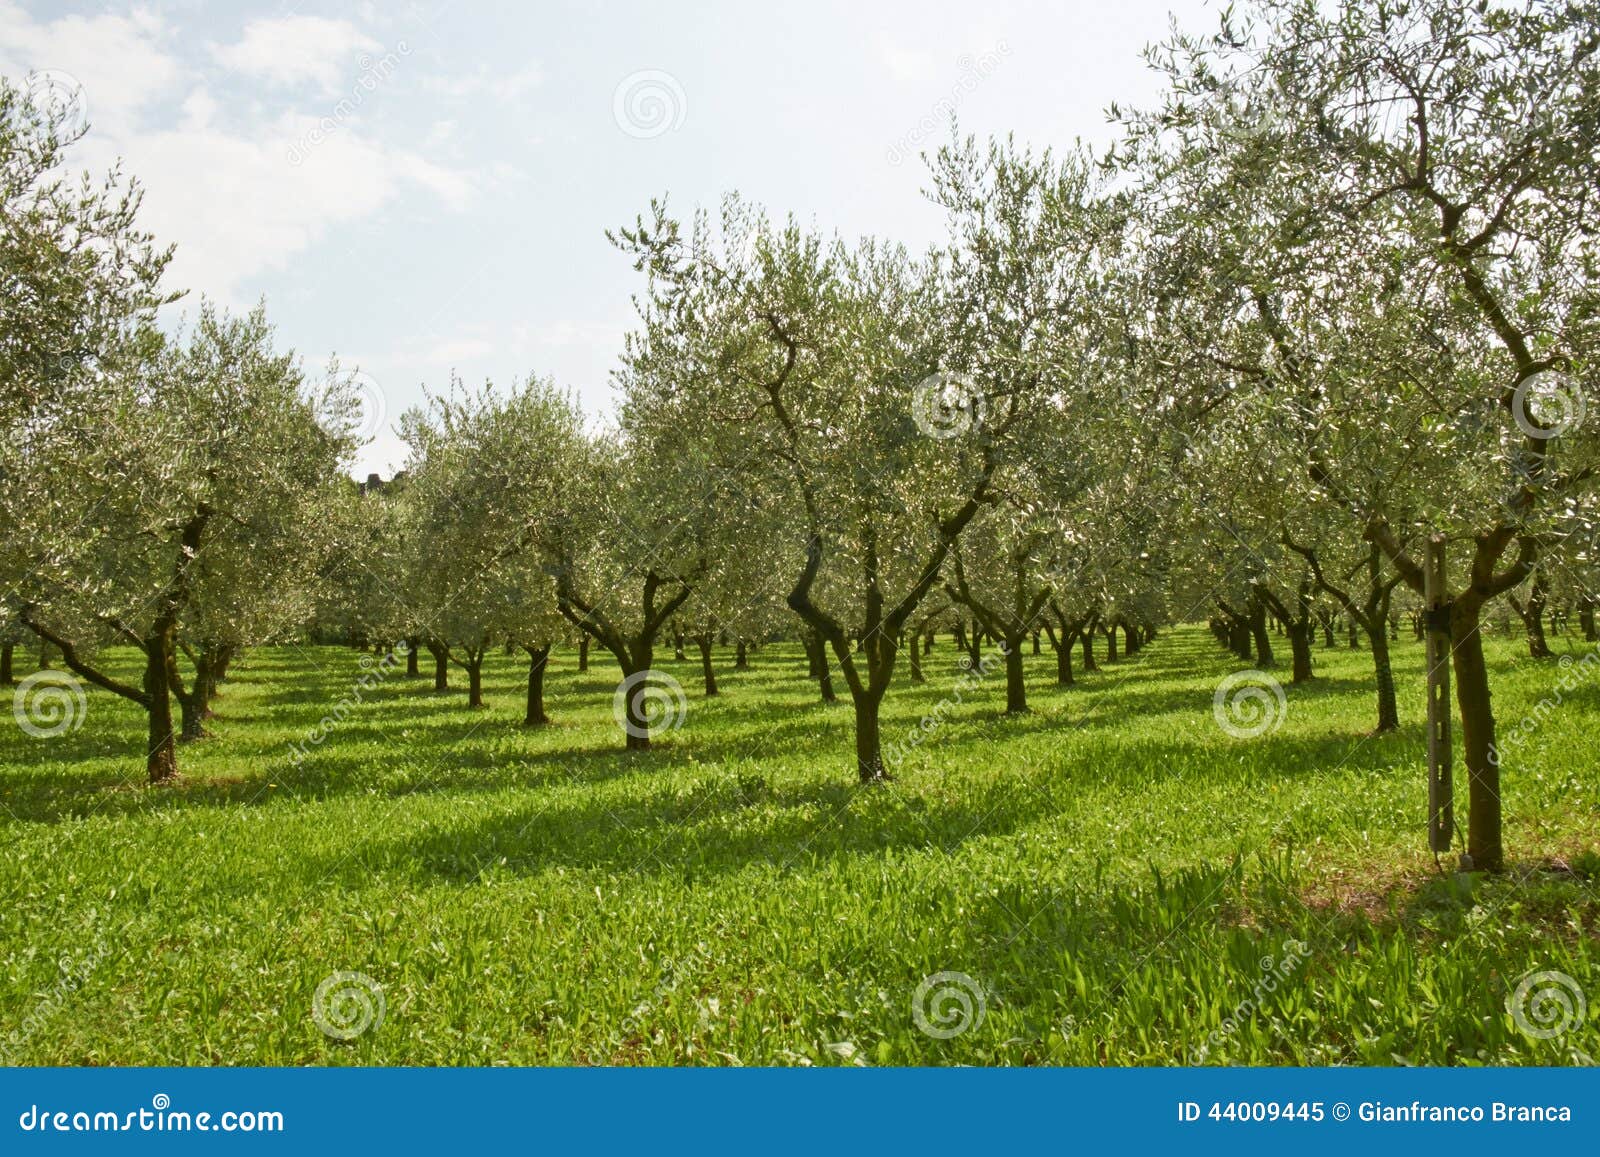 olive plants